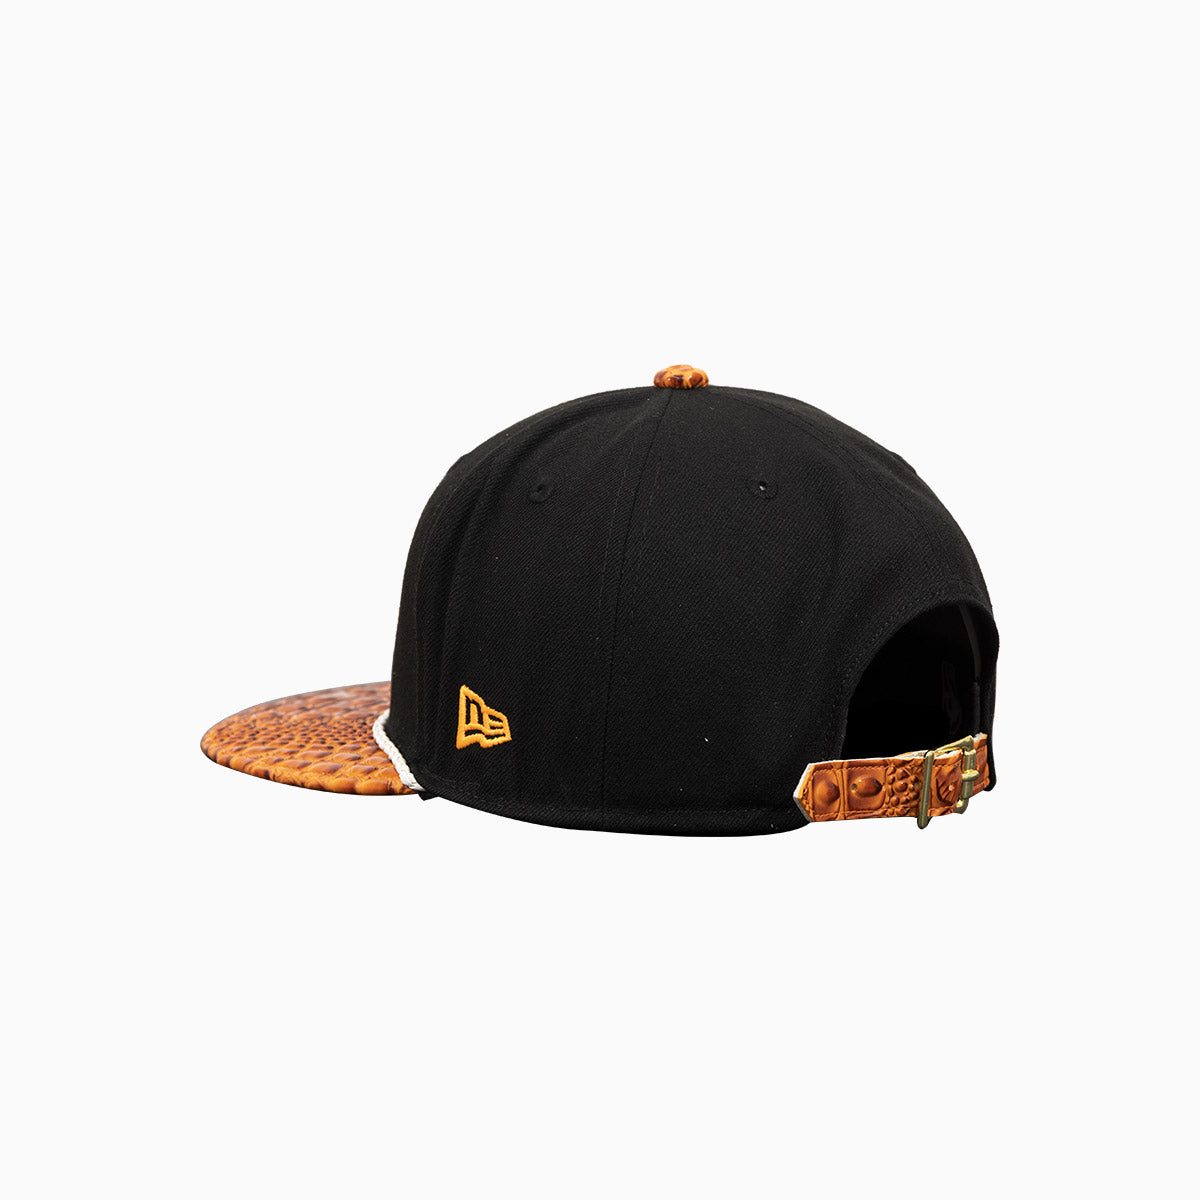 breyers-buck-50-chicago-bulls-hat-with-leather-visor-breyers-tcbh-black-orange